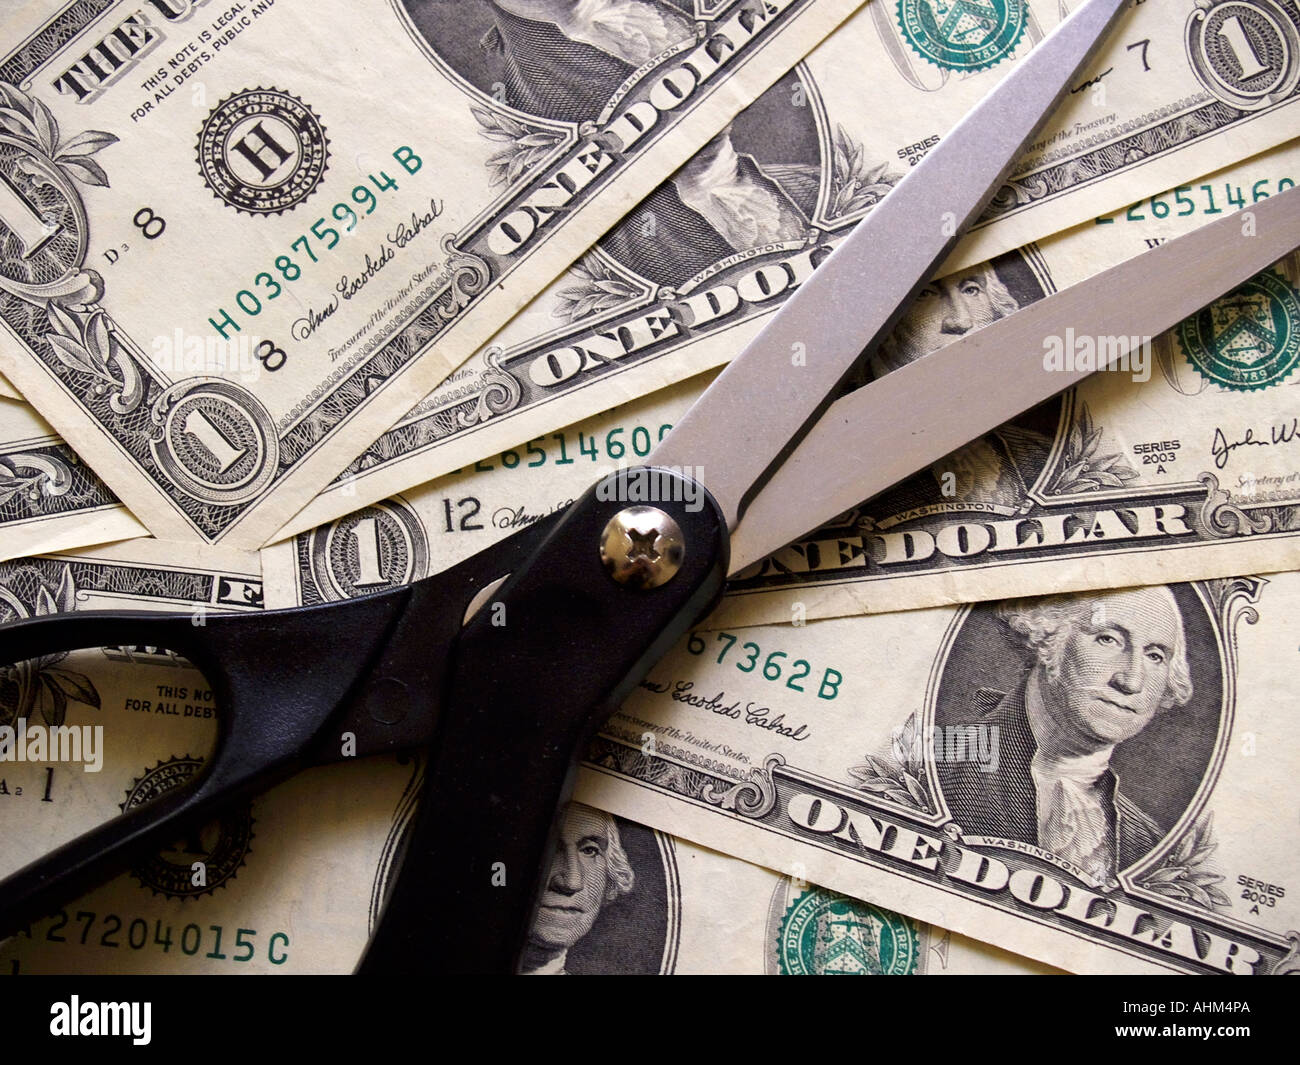 Sharpened black handled scissors against a background of dollar bills Stock Photo